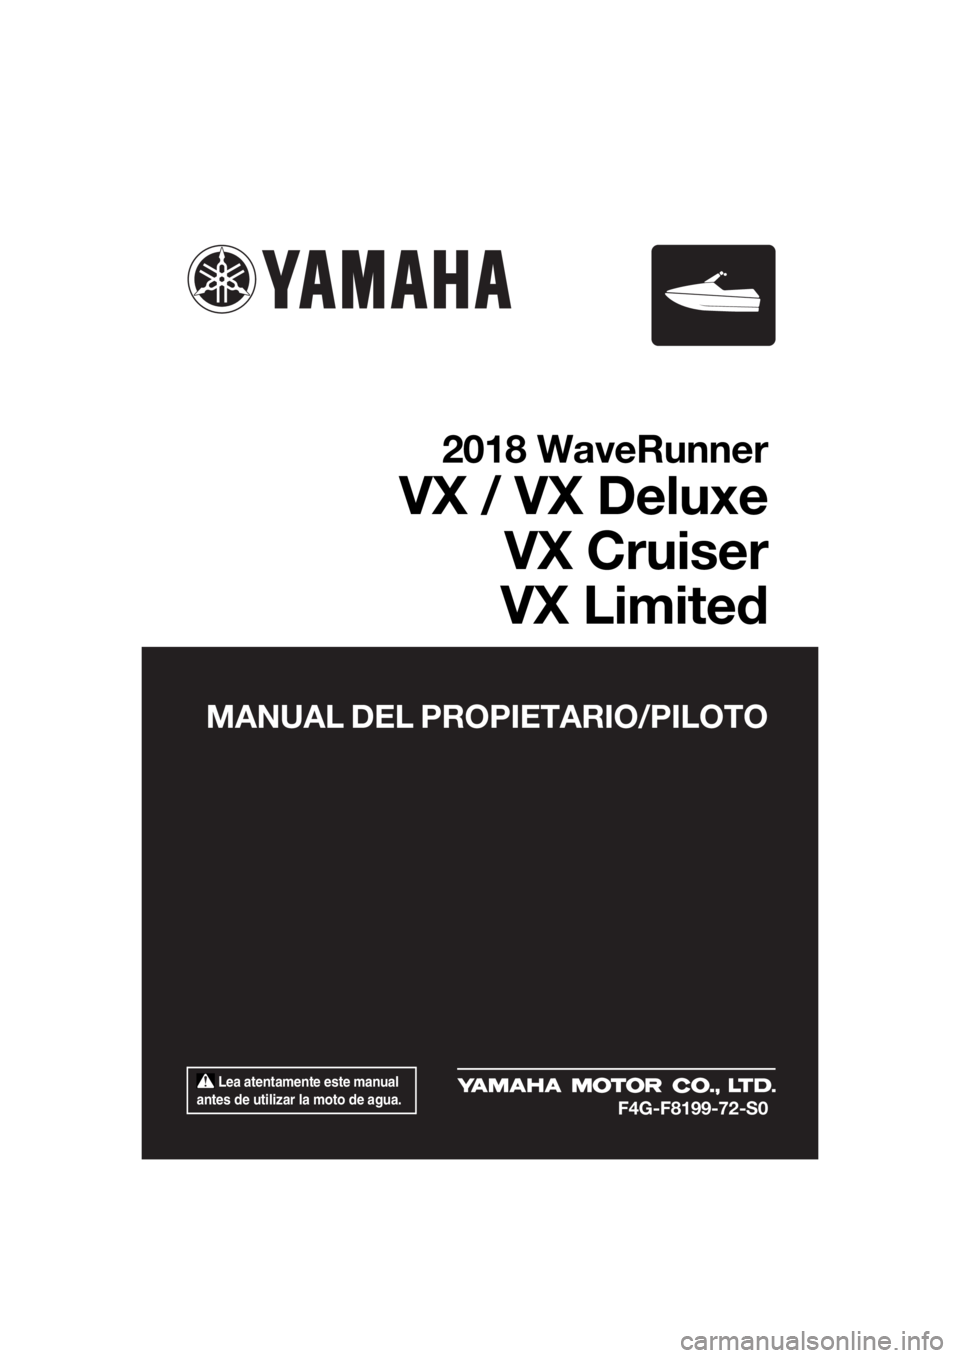 YAMAHA VX CRUISER 2018  Manuale de Empleo (in Spanish)  Lea atentamente este manual 
antes de utilizar la moto de agua.
MANUAL DEL PROPIETARIO/PILOTO
2018 WaveRunner
VX / VX Deluxe
VX Cruiser
VX Limited
F4G-F8199-72-S0
UF4G72S0.book  Page 1  Monday, July 